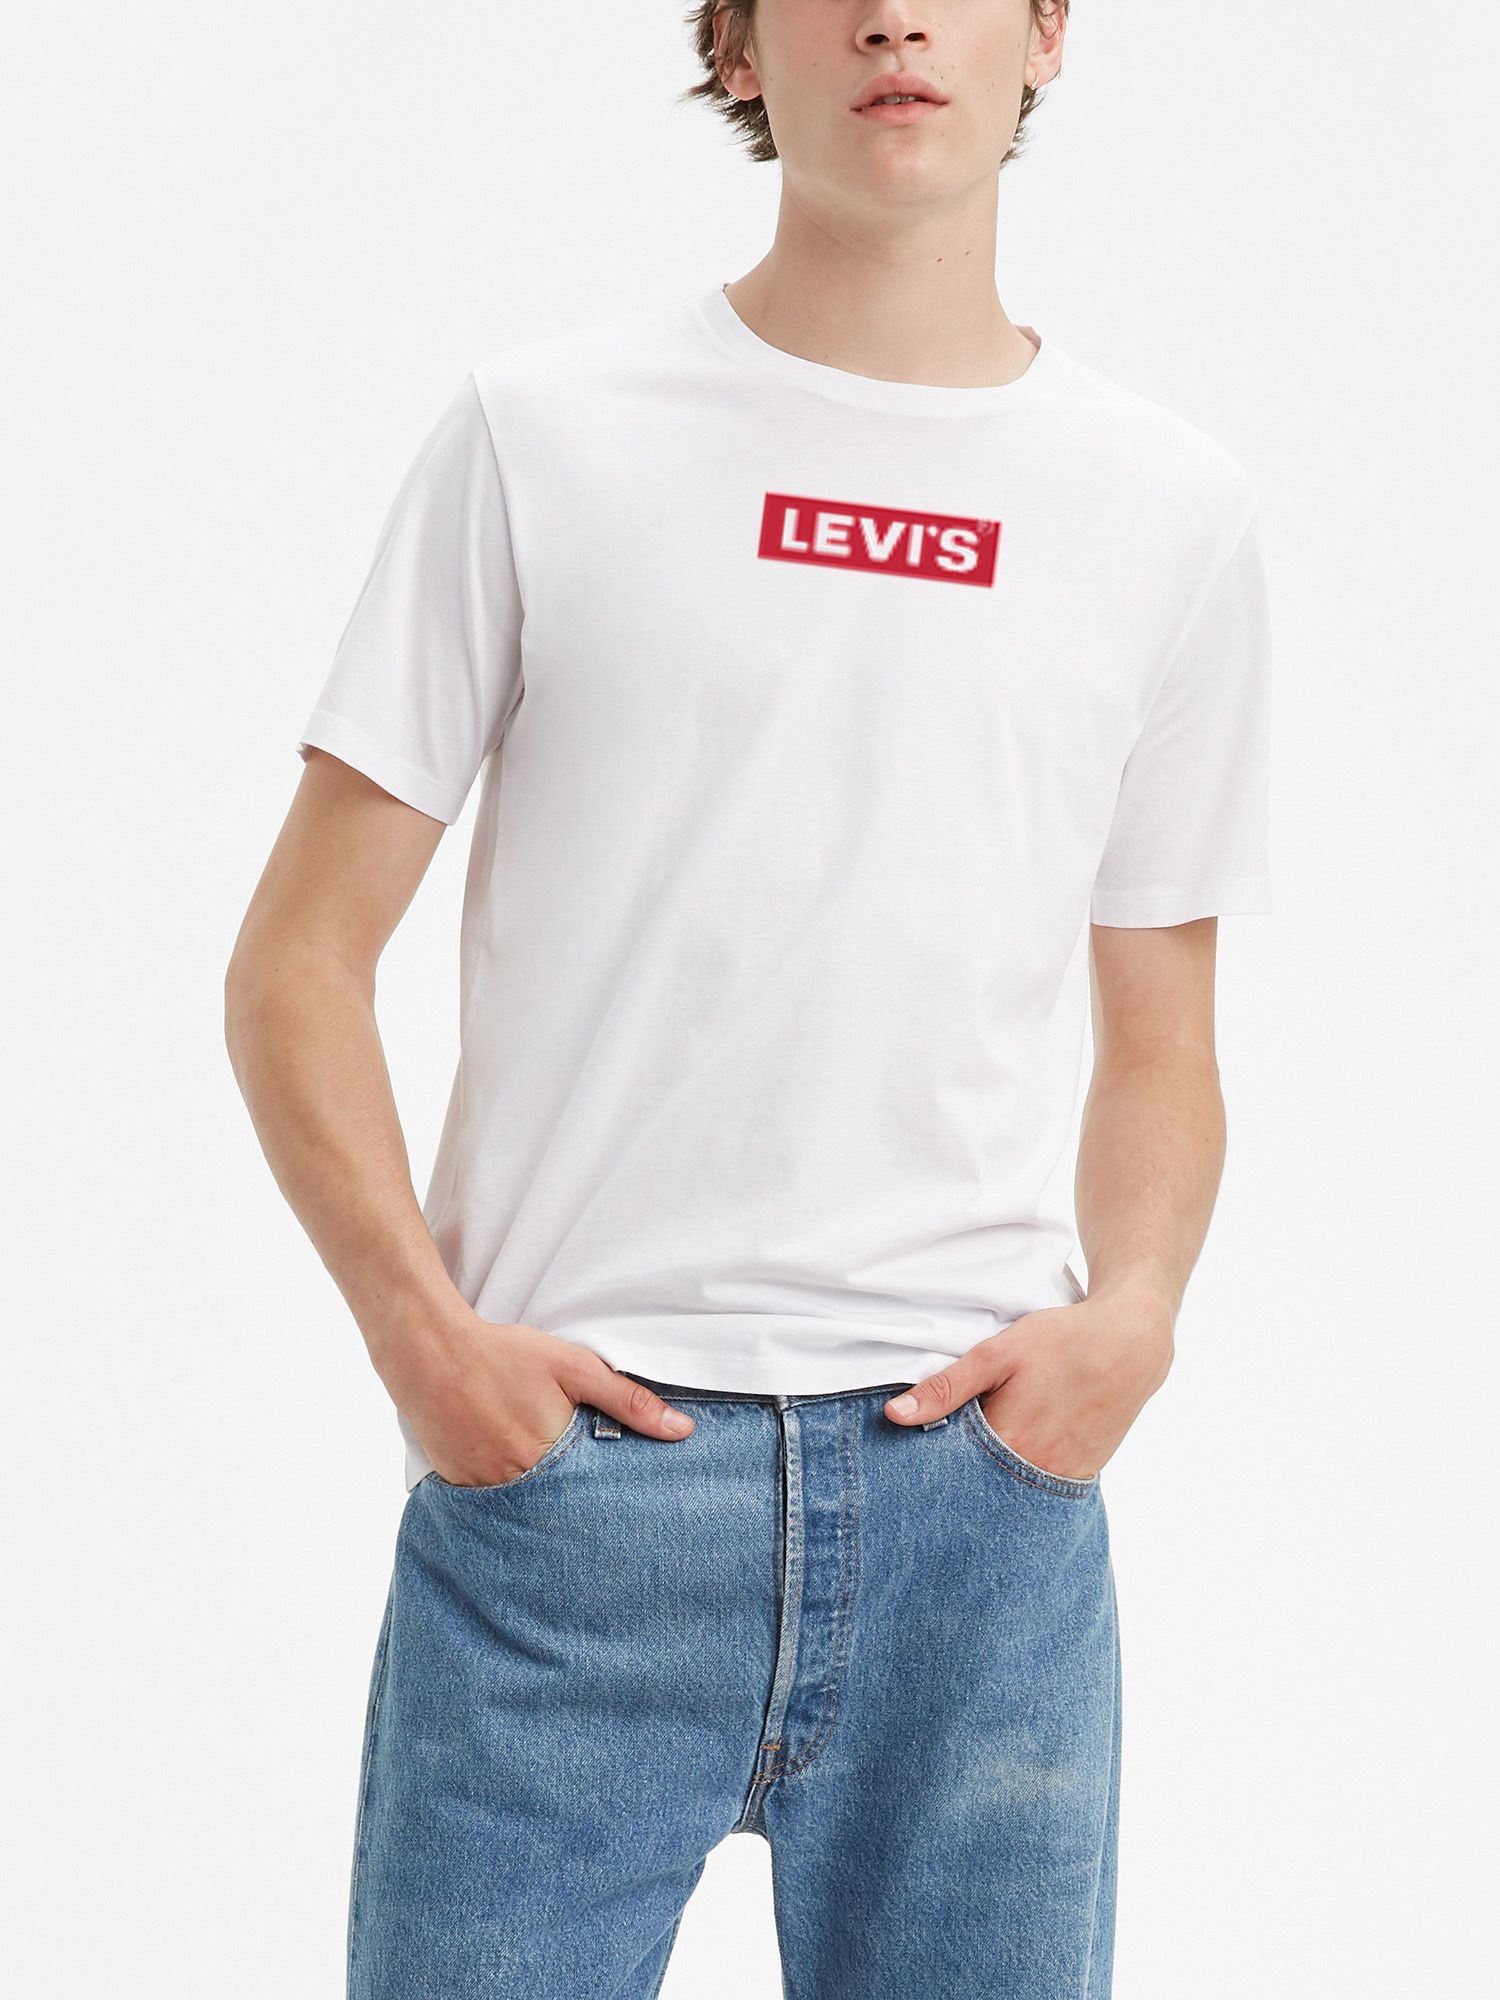 Купить футболку levis. Майка Левис белая. Футболка мужская Levi's Housemark graphic. Футболка Левис белая. Levis футболка White.